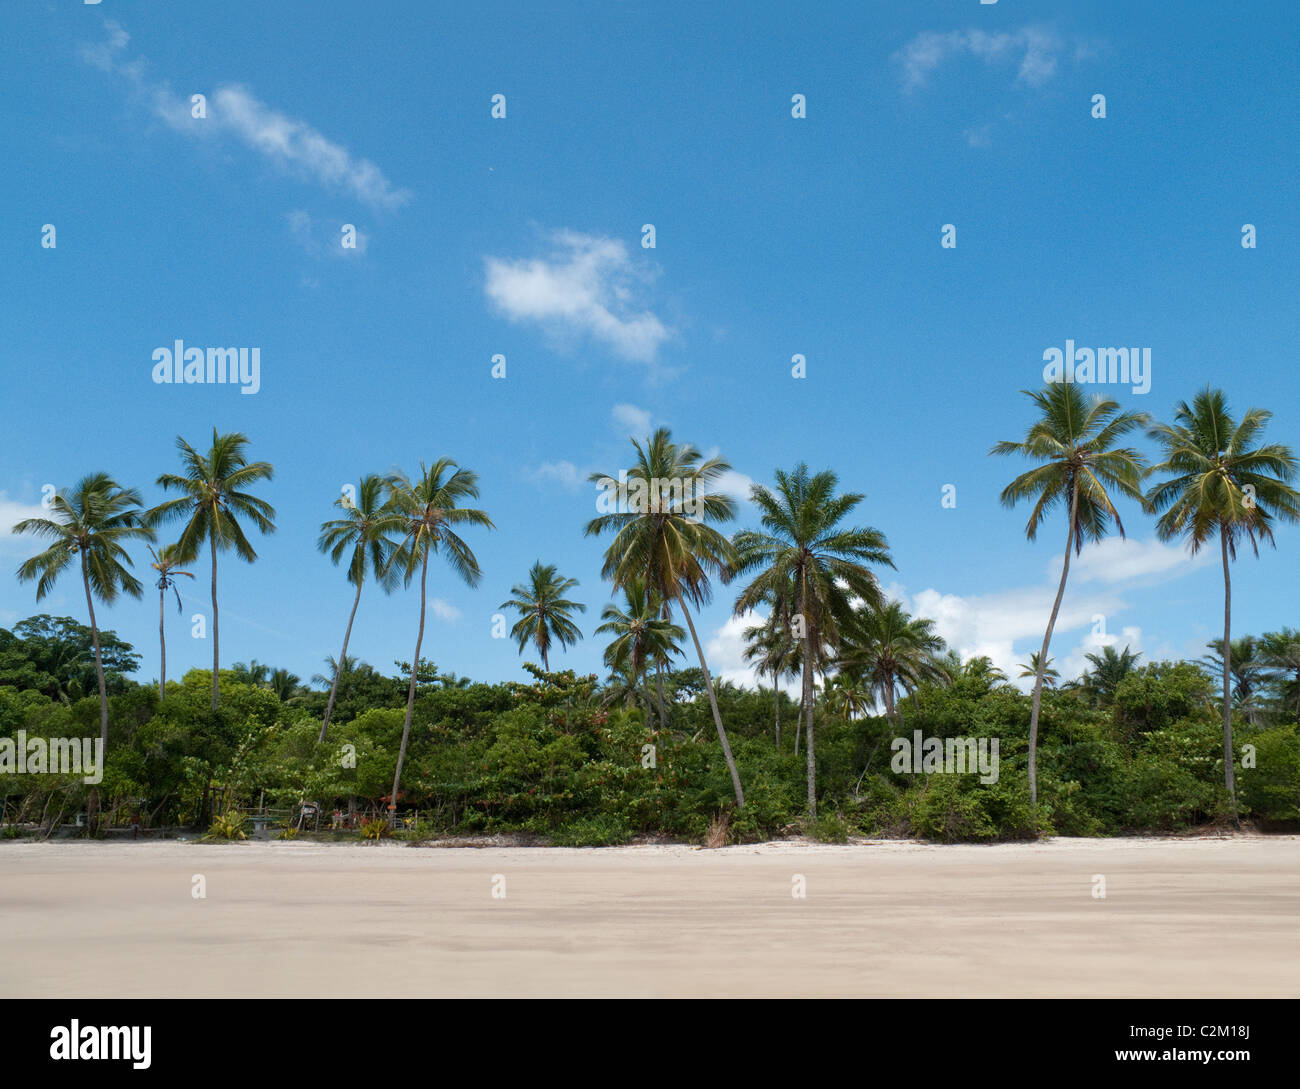 Palmen am Strand, Insel Boipeba, Bahia, Brasilien Stockfoto